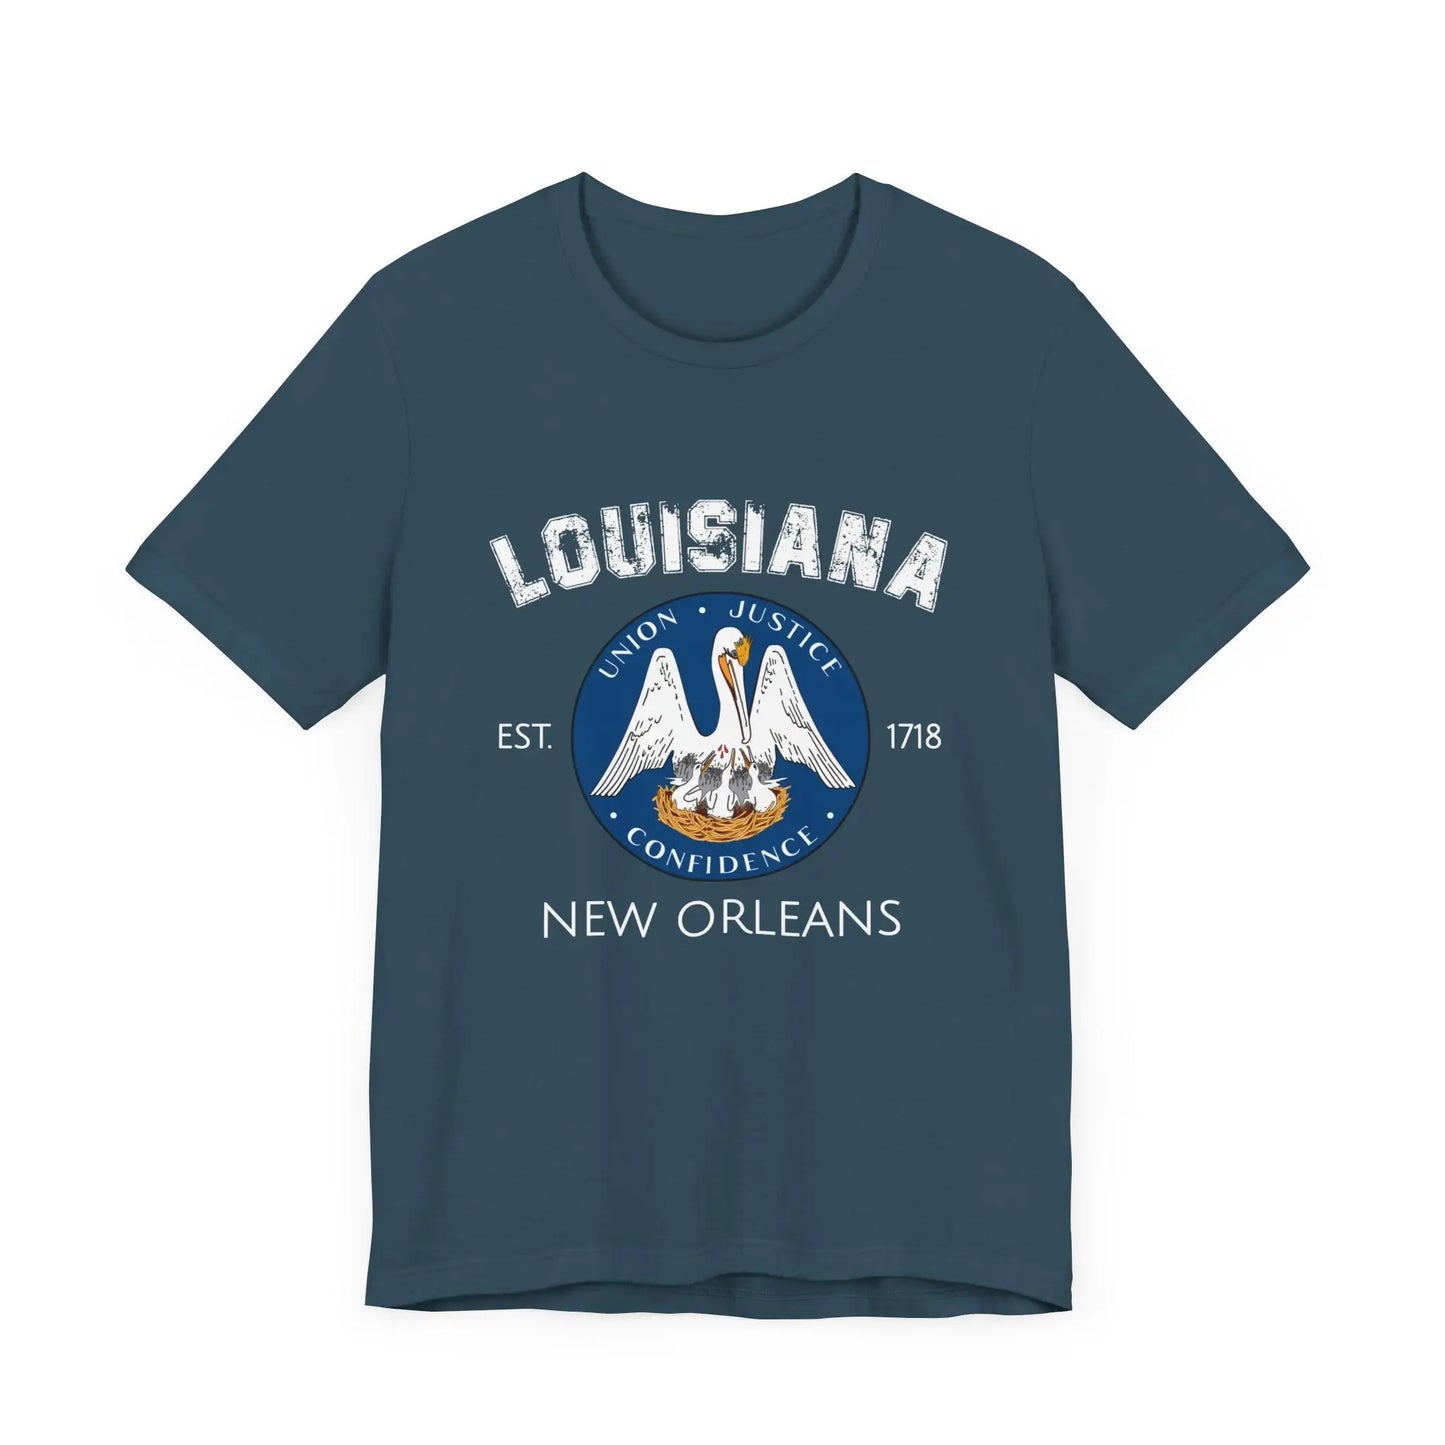 New Orleans Louisiana Est 1718 Men's Jersey Short Sleeve Tee - Wicked Tees